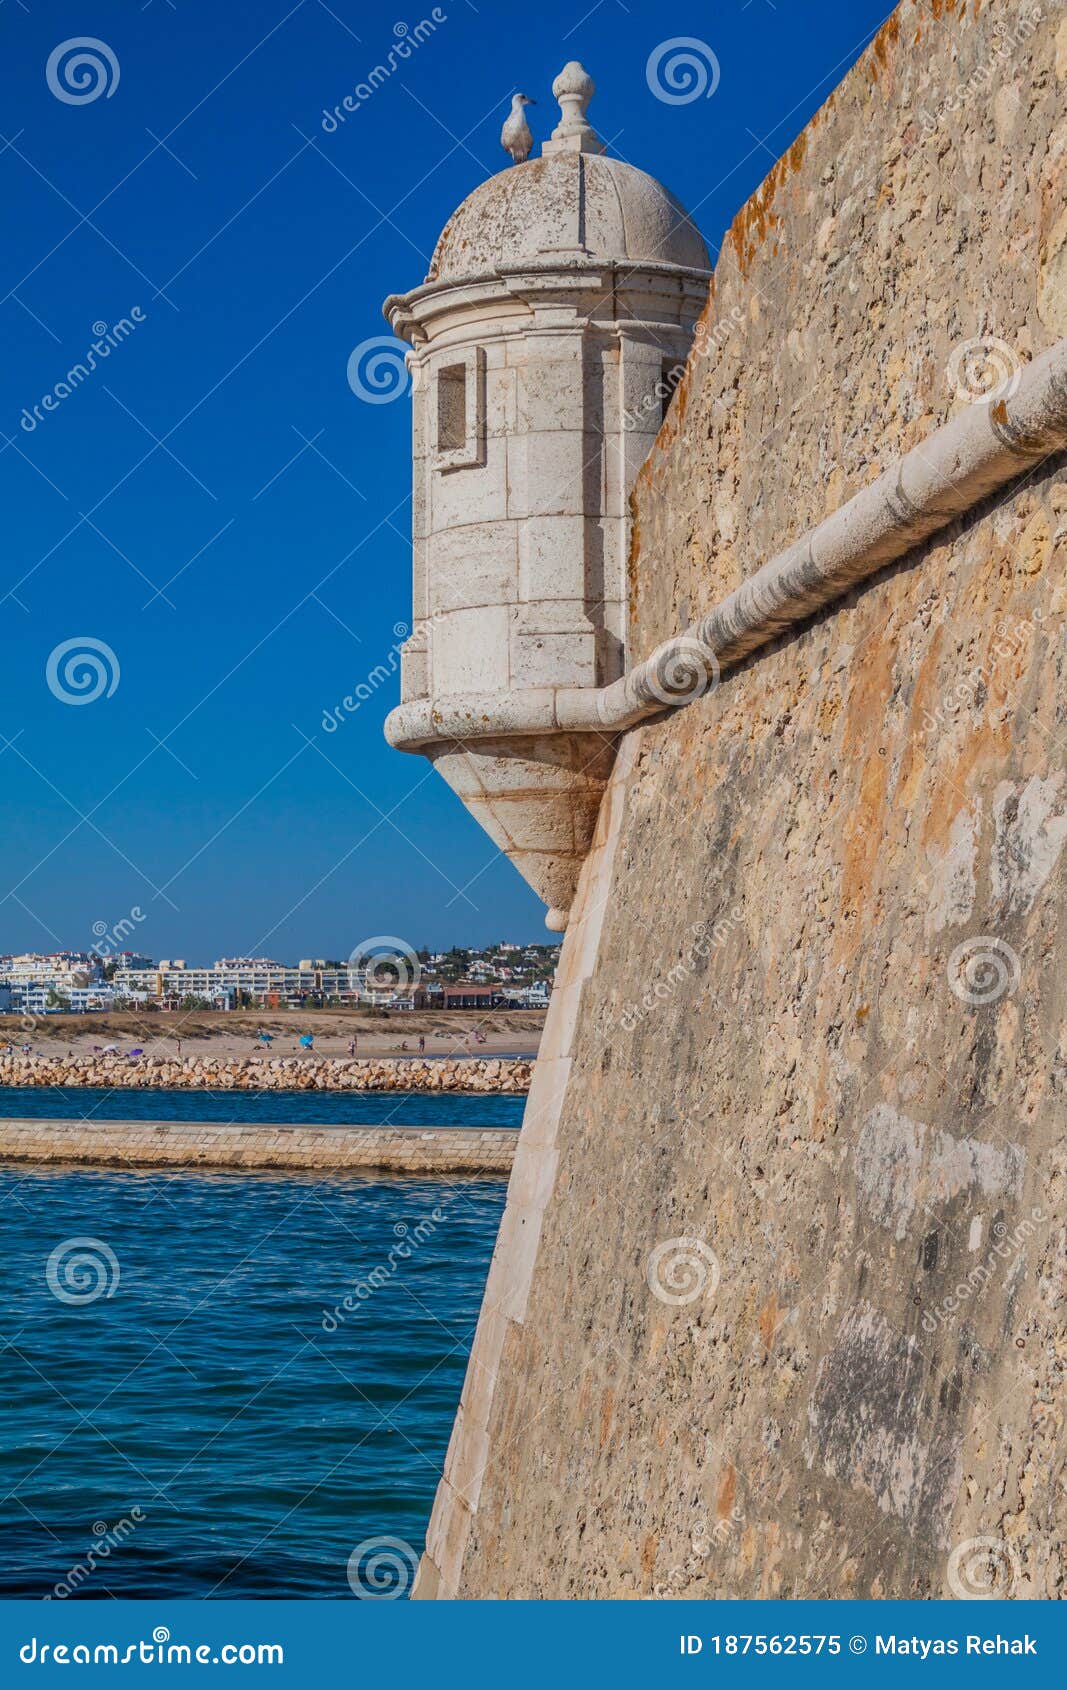 fortaleza da ponta da bandeira fortress in lagos, portuga